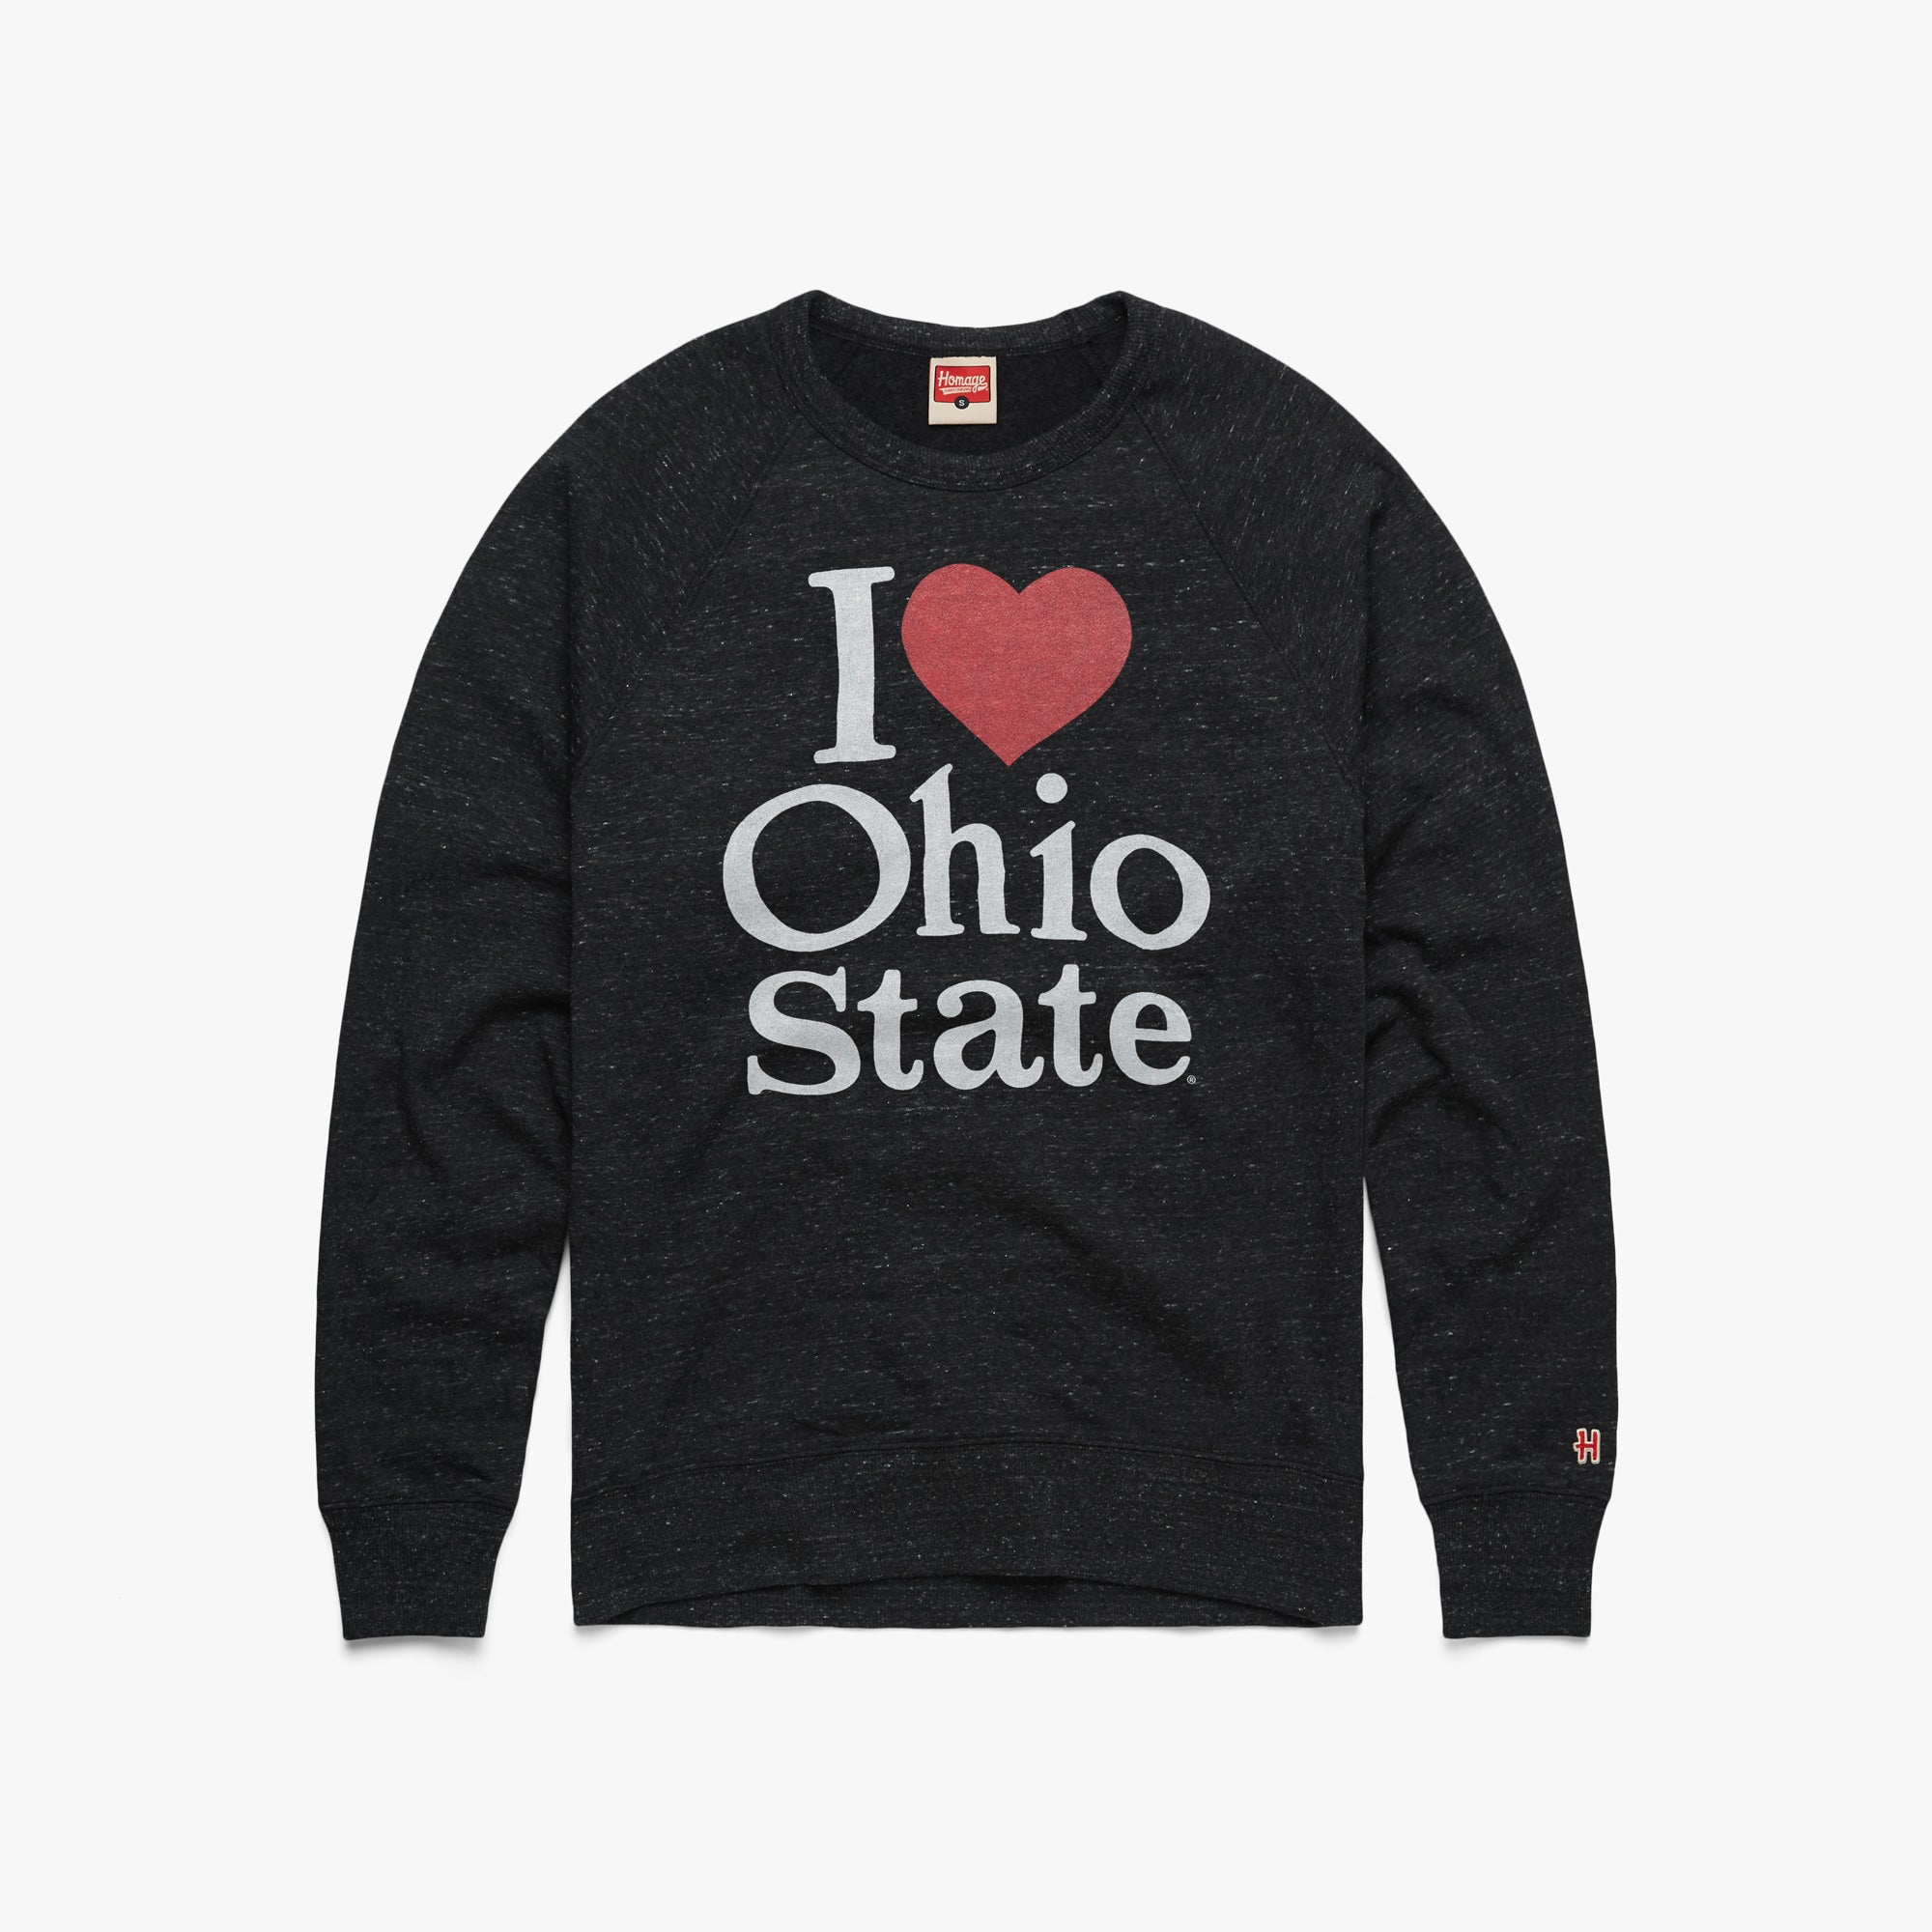 I Heart Ohio State Crewneck